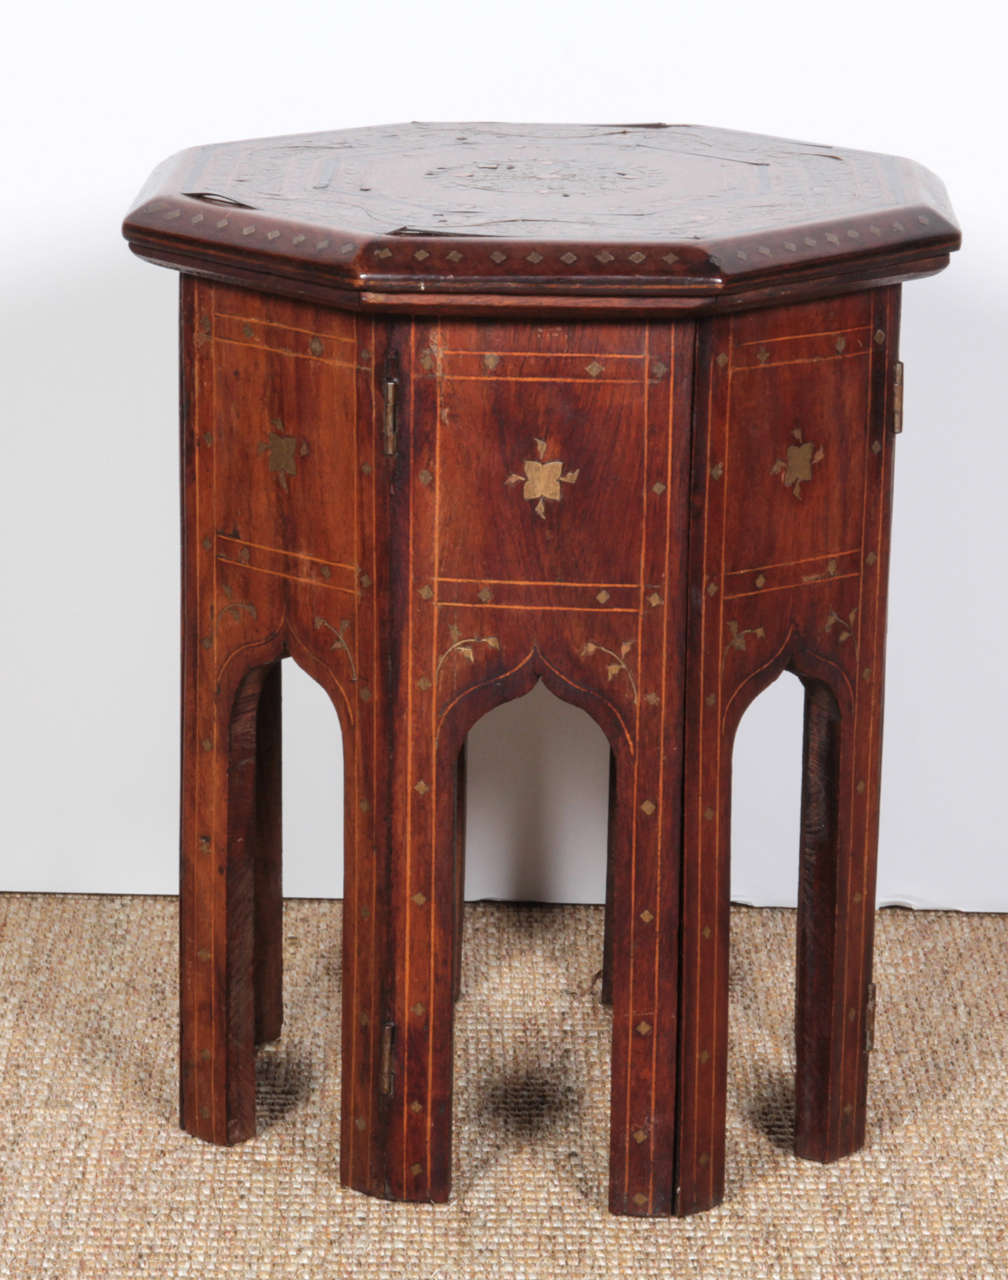 Mini 19th century Syrian table.